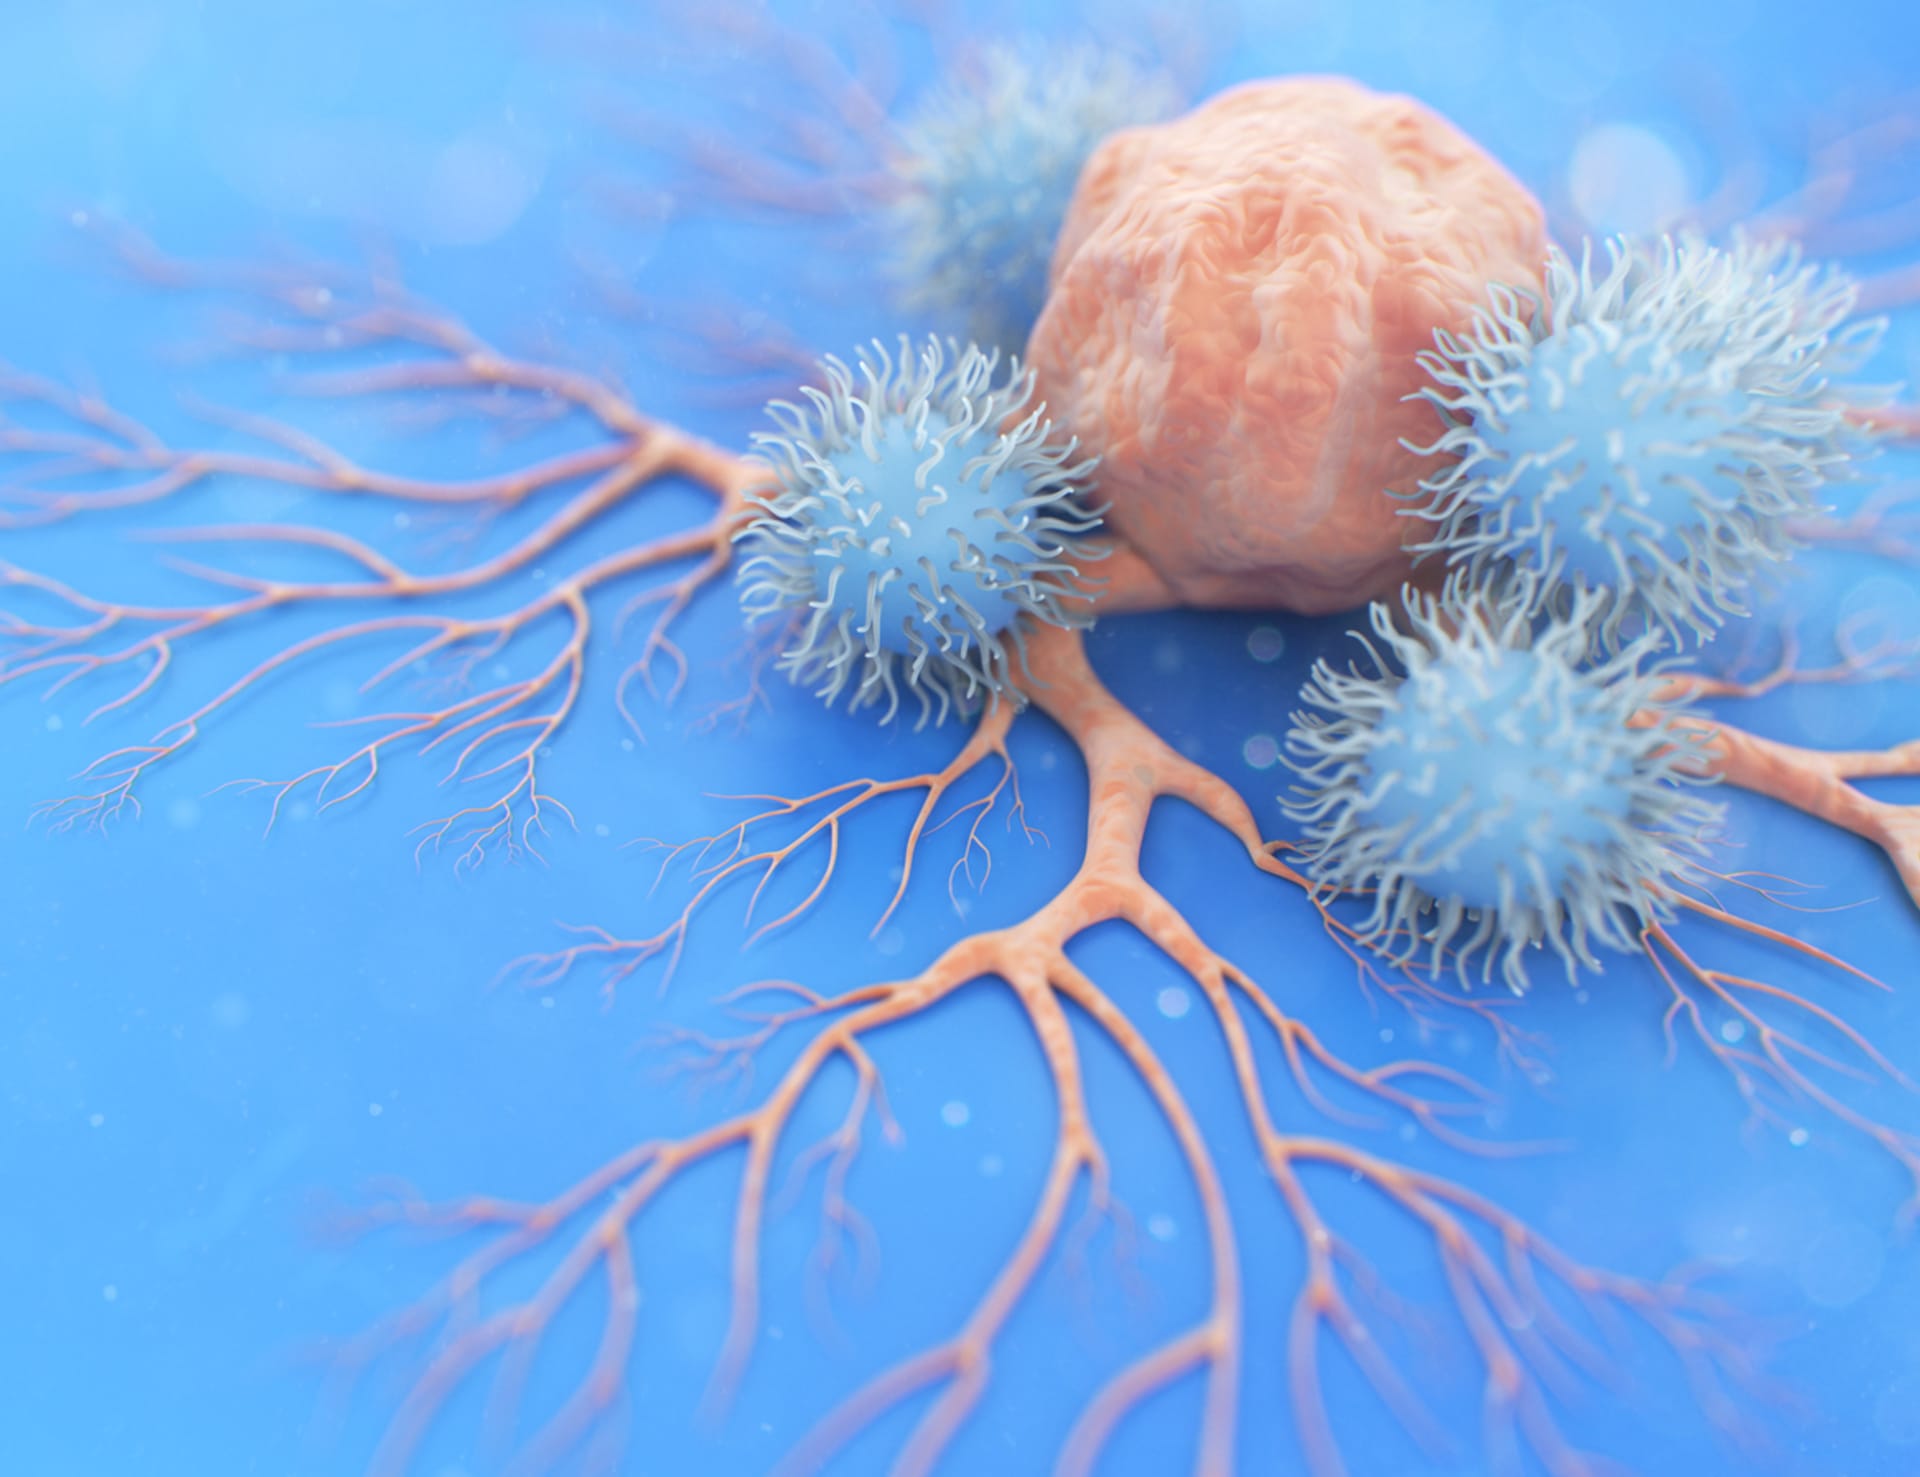 Rakovinná buňka napadená imunitou